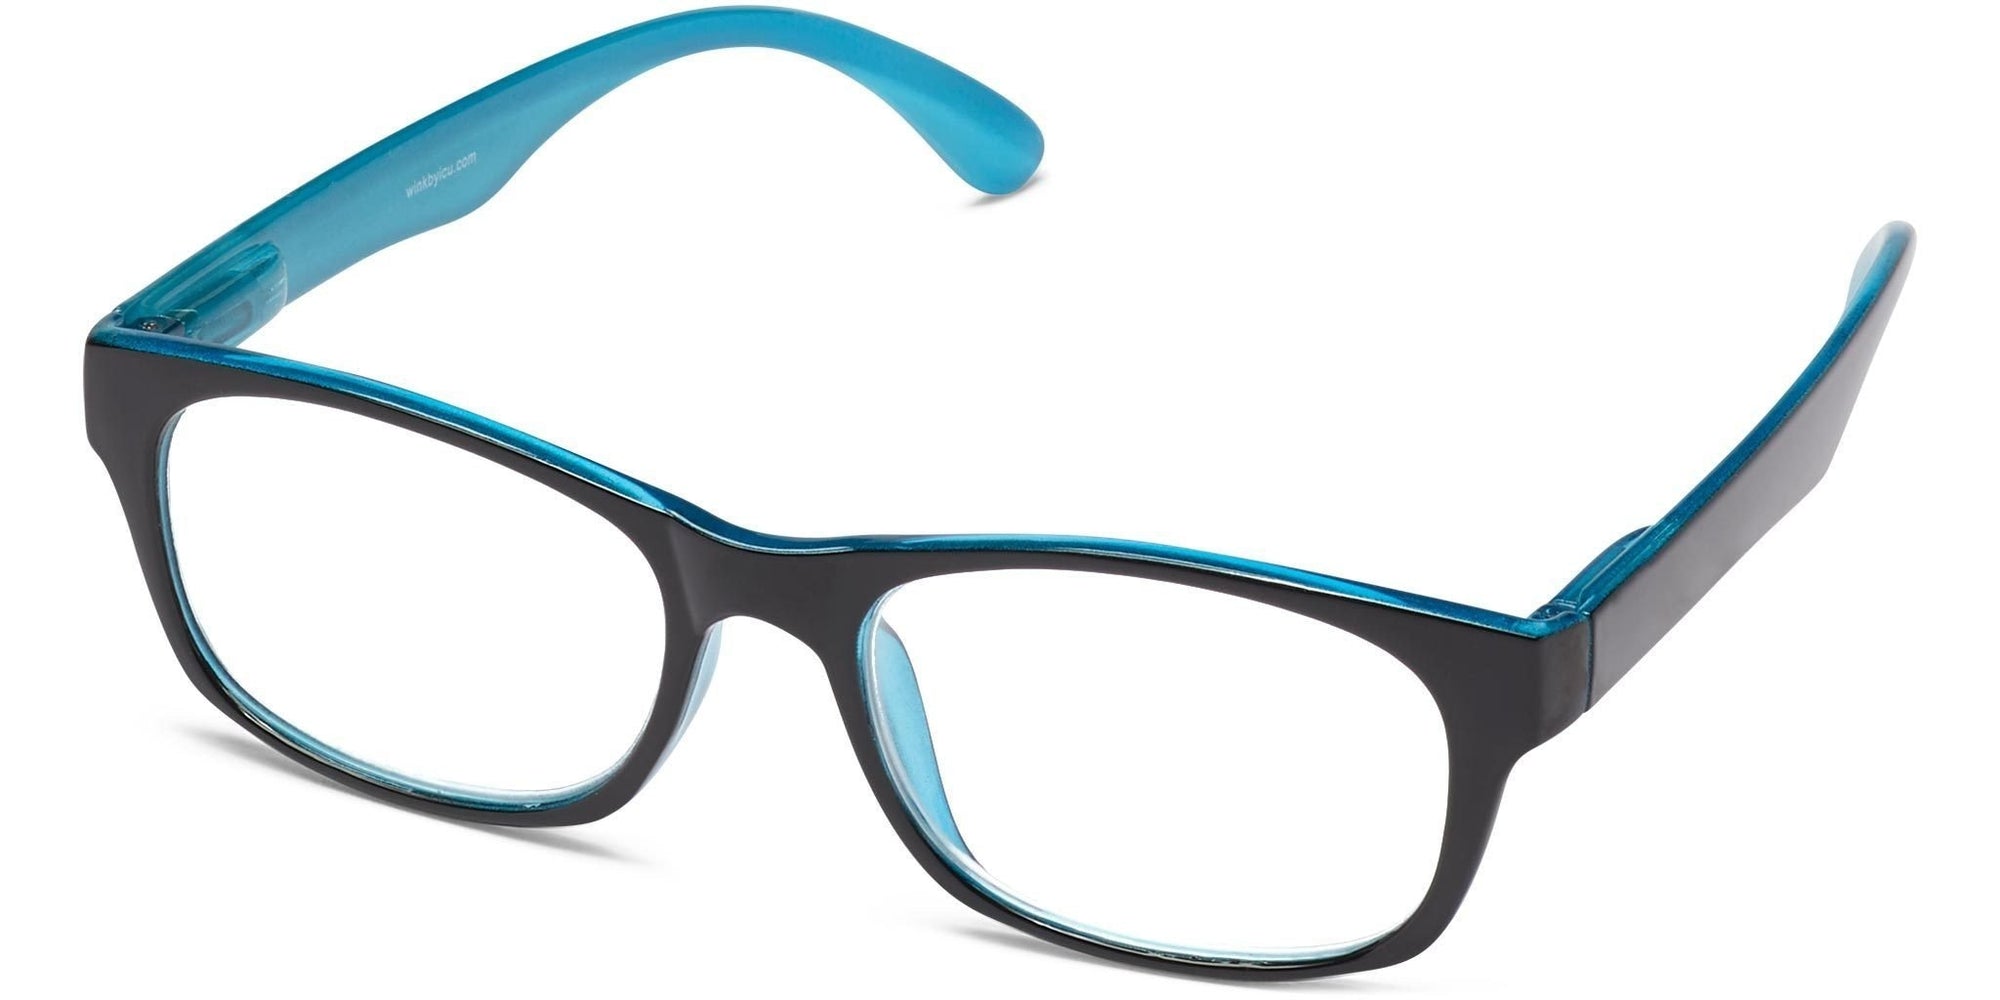 Ramona - Black and Turquoise / 1.25 - Reading Glasses